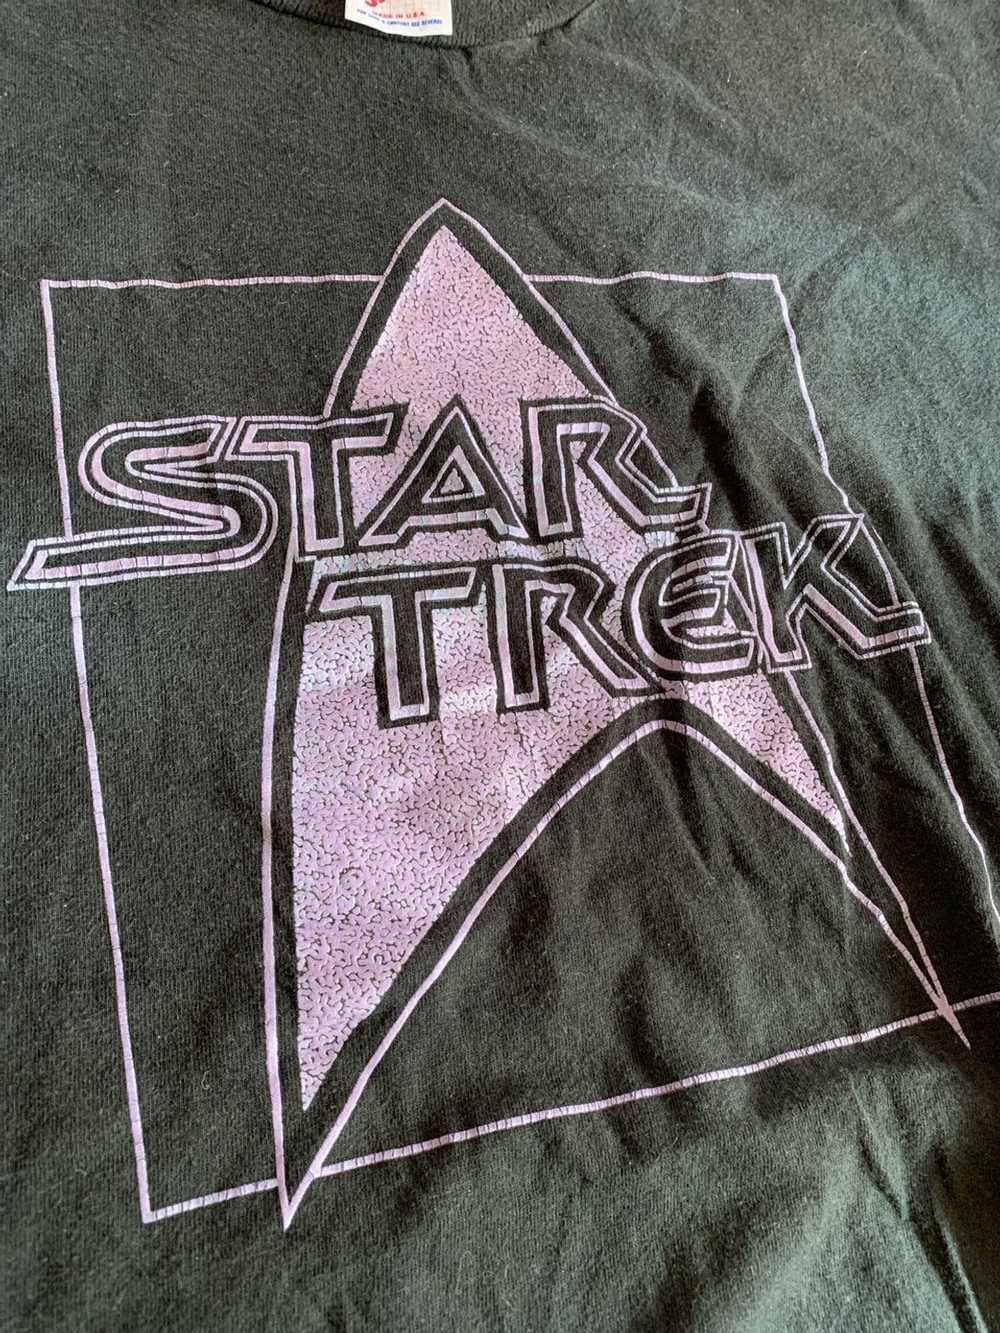 Vintage Star Trek vintage t-shirt 1999 Y2K - image 2